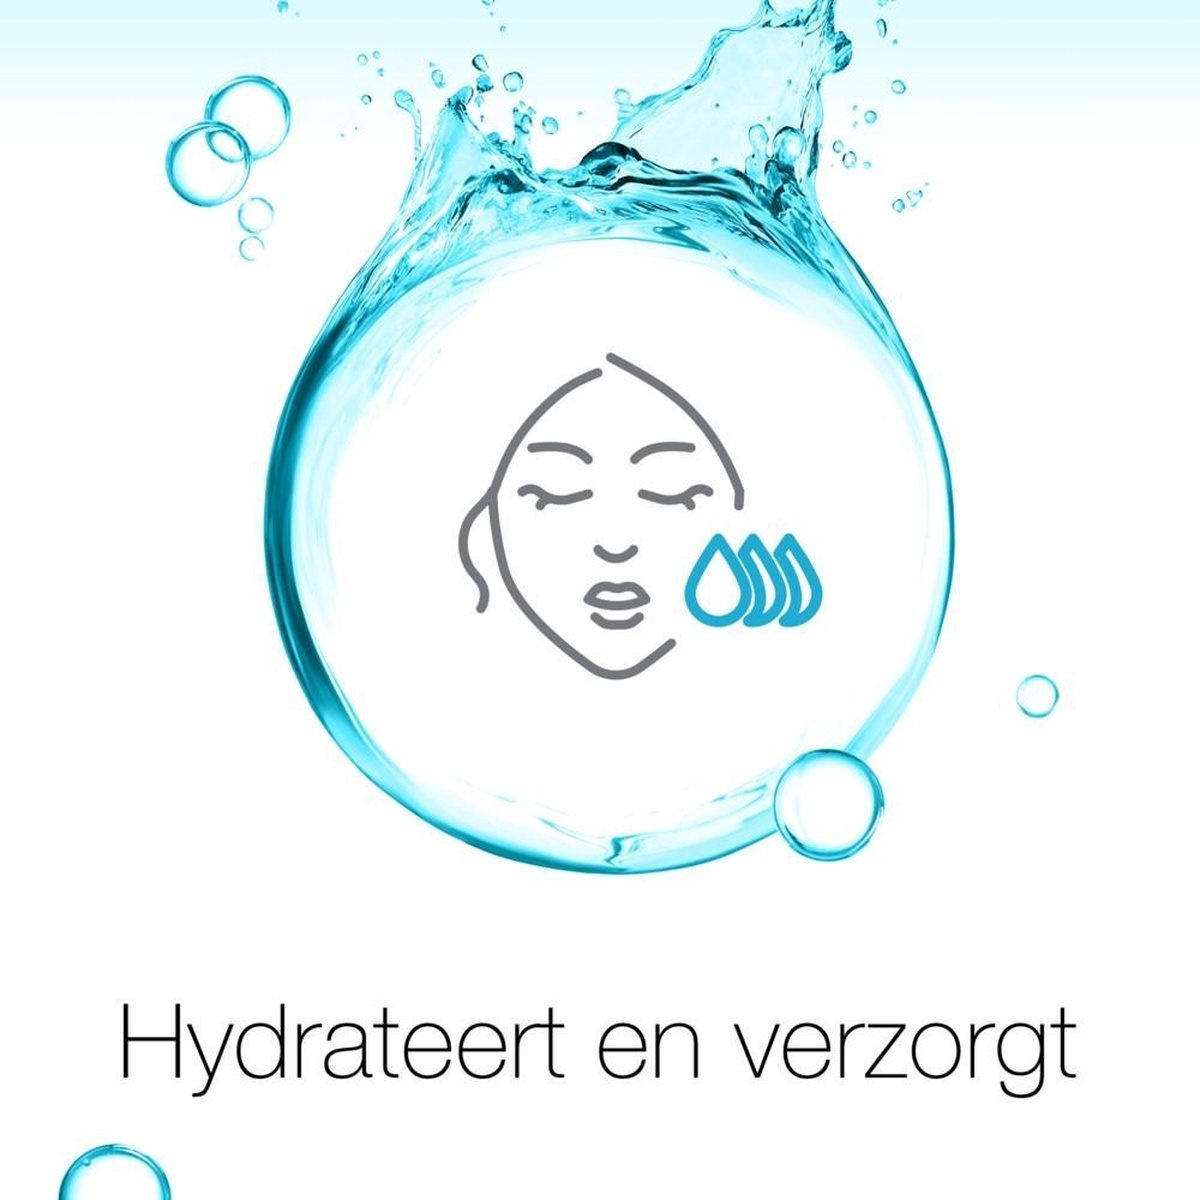 Neutrogena Hydro Boost Aqua Gel Normale & Gemengde Huid 50ml